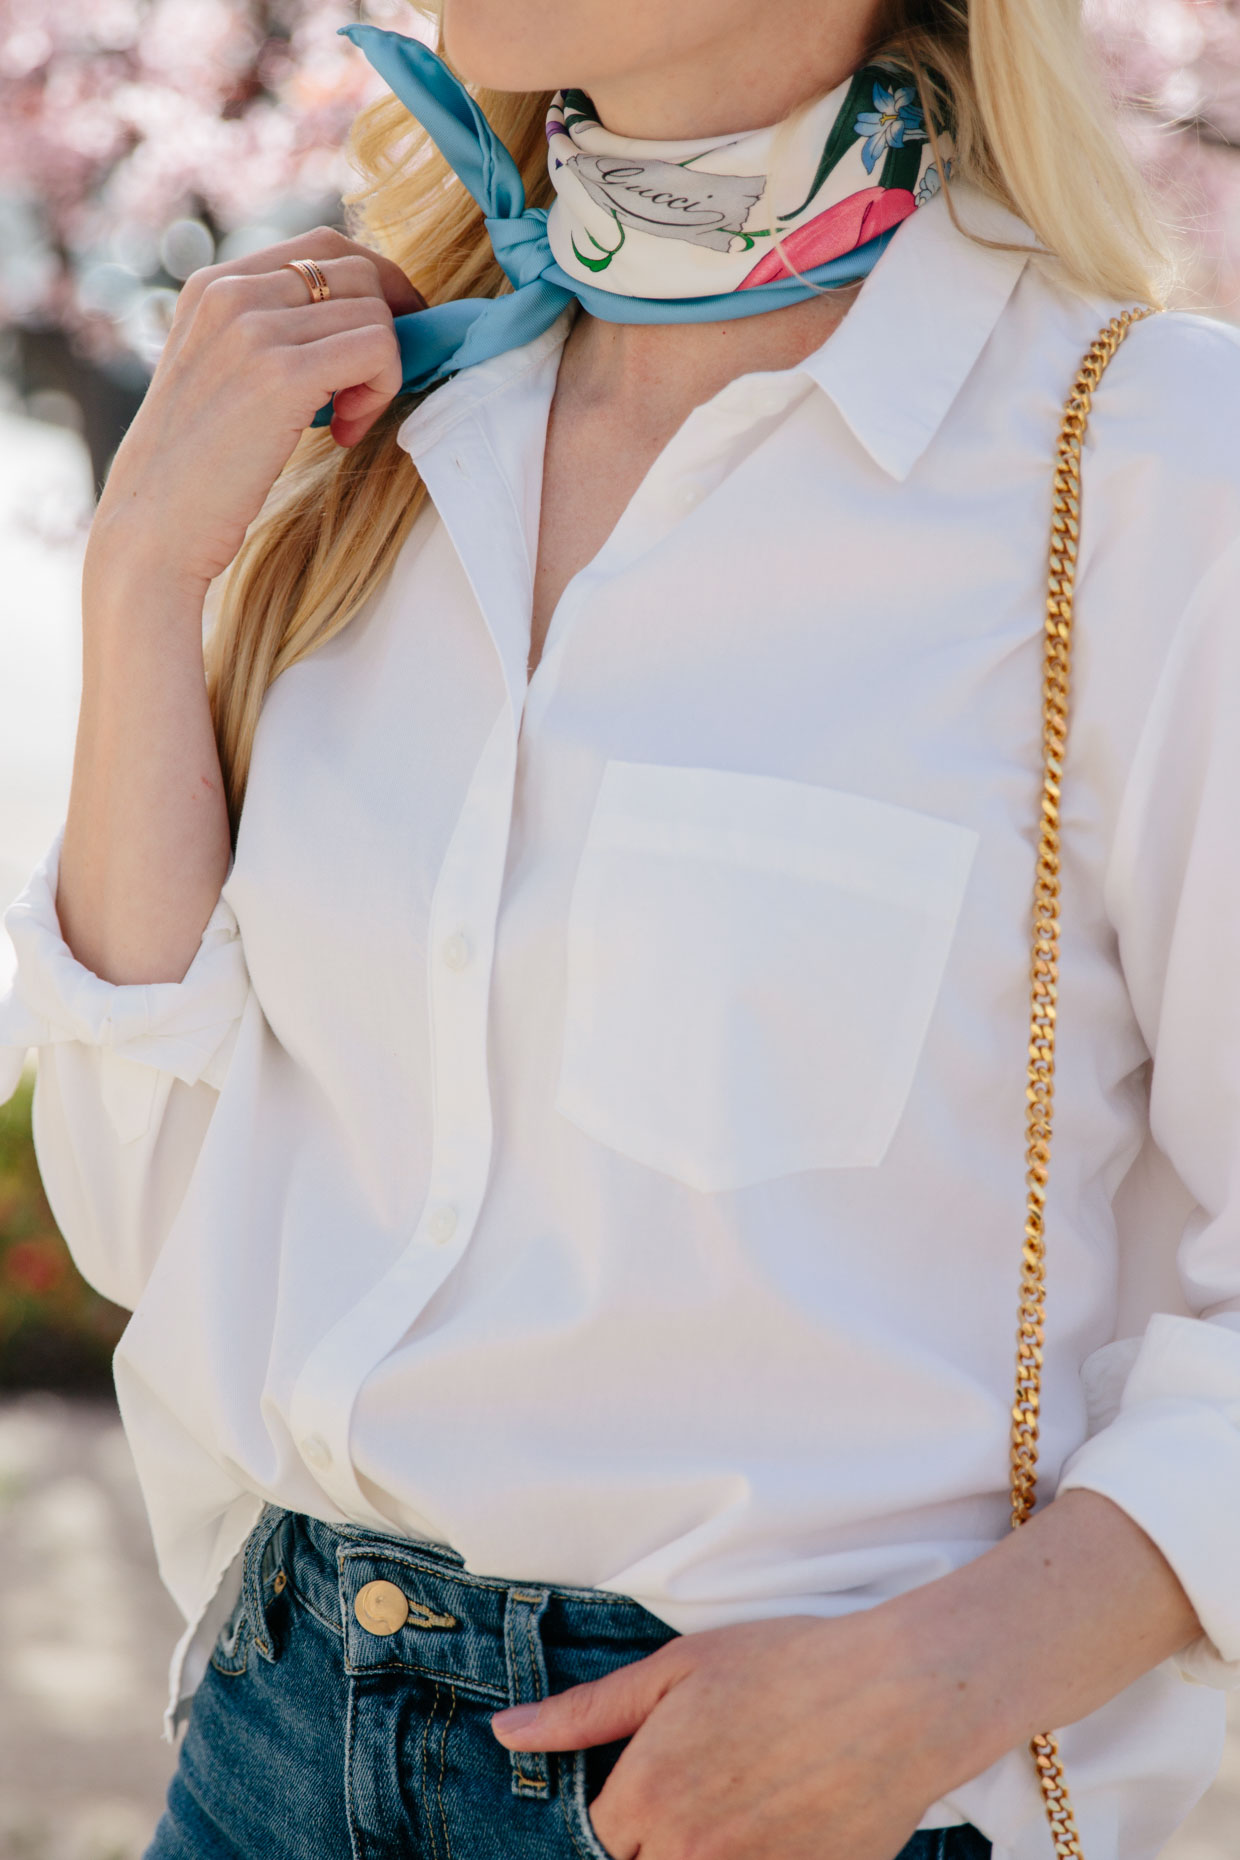 Gucci floral print silk scarf, how to tie silk scarf, Chanel oversized  tortoiseshell sunglasses, Louis Vuitton st. germain shoulder bag dune  leather, Italian fashion blogger - Meagan's Moda